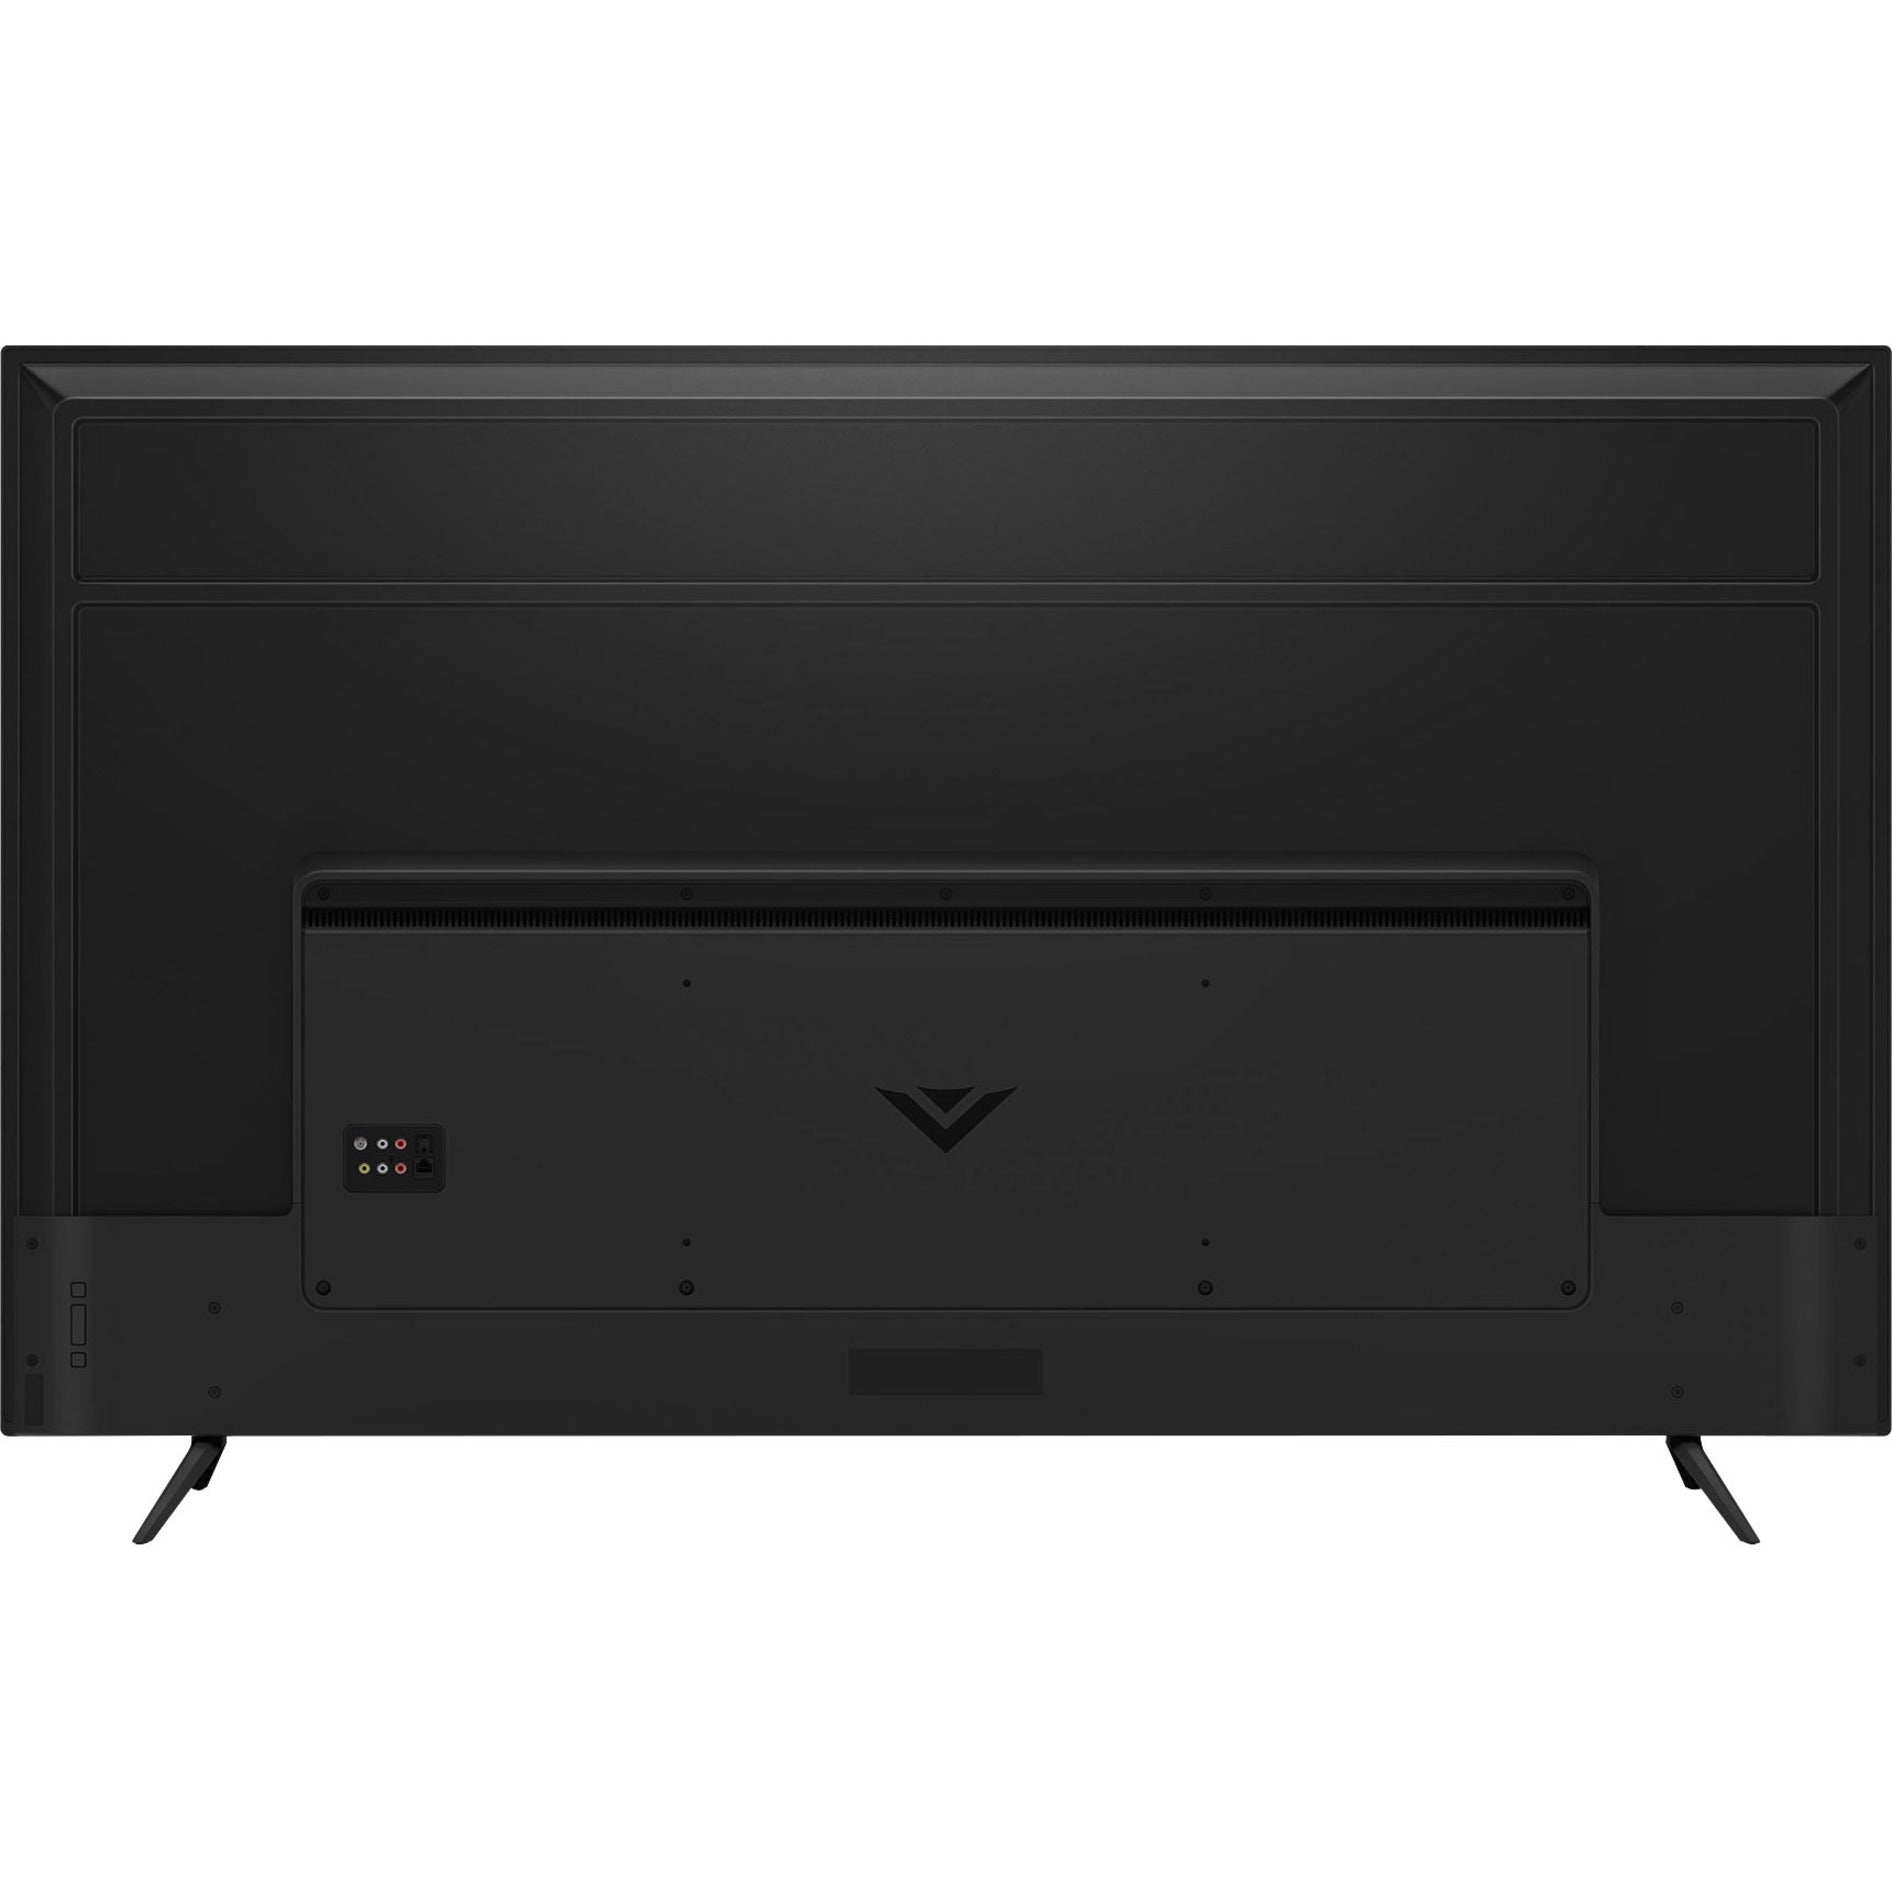 VIZIO V655-J09 V-Series 65" Class 4K HDR Smart TV, Full Array LED, Alexa/Google Assistant Compatible